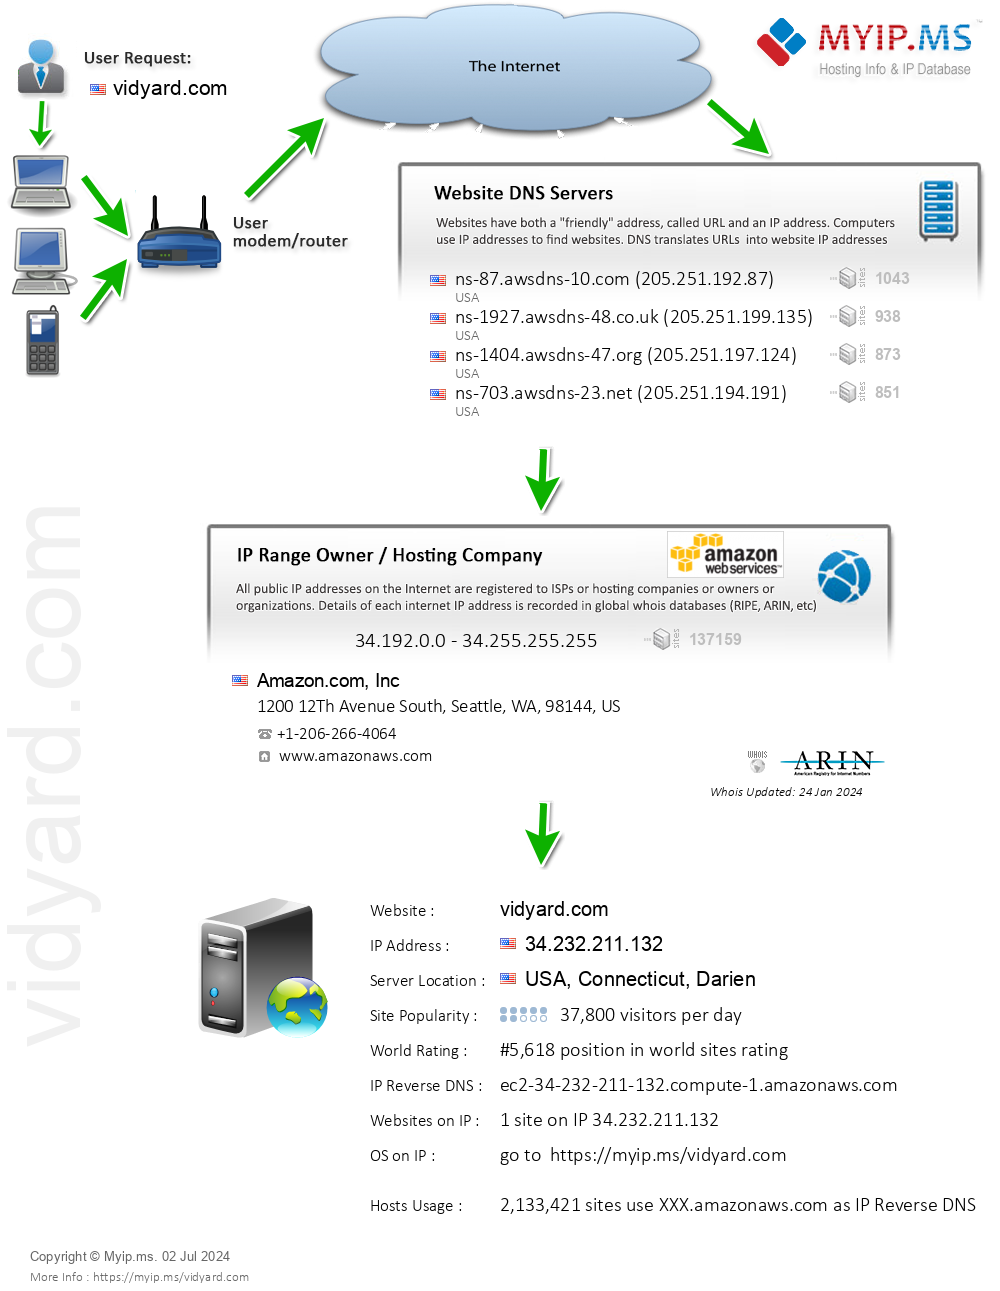 Vidyard.com - Website Hosting Visual IP Diagram